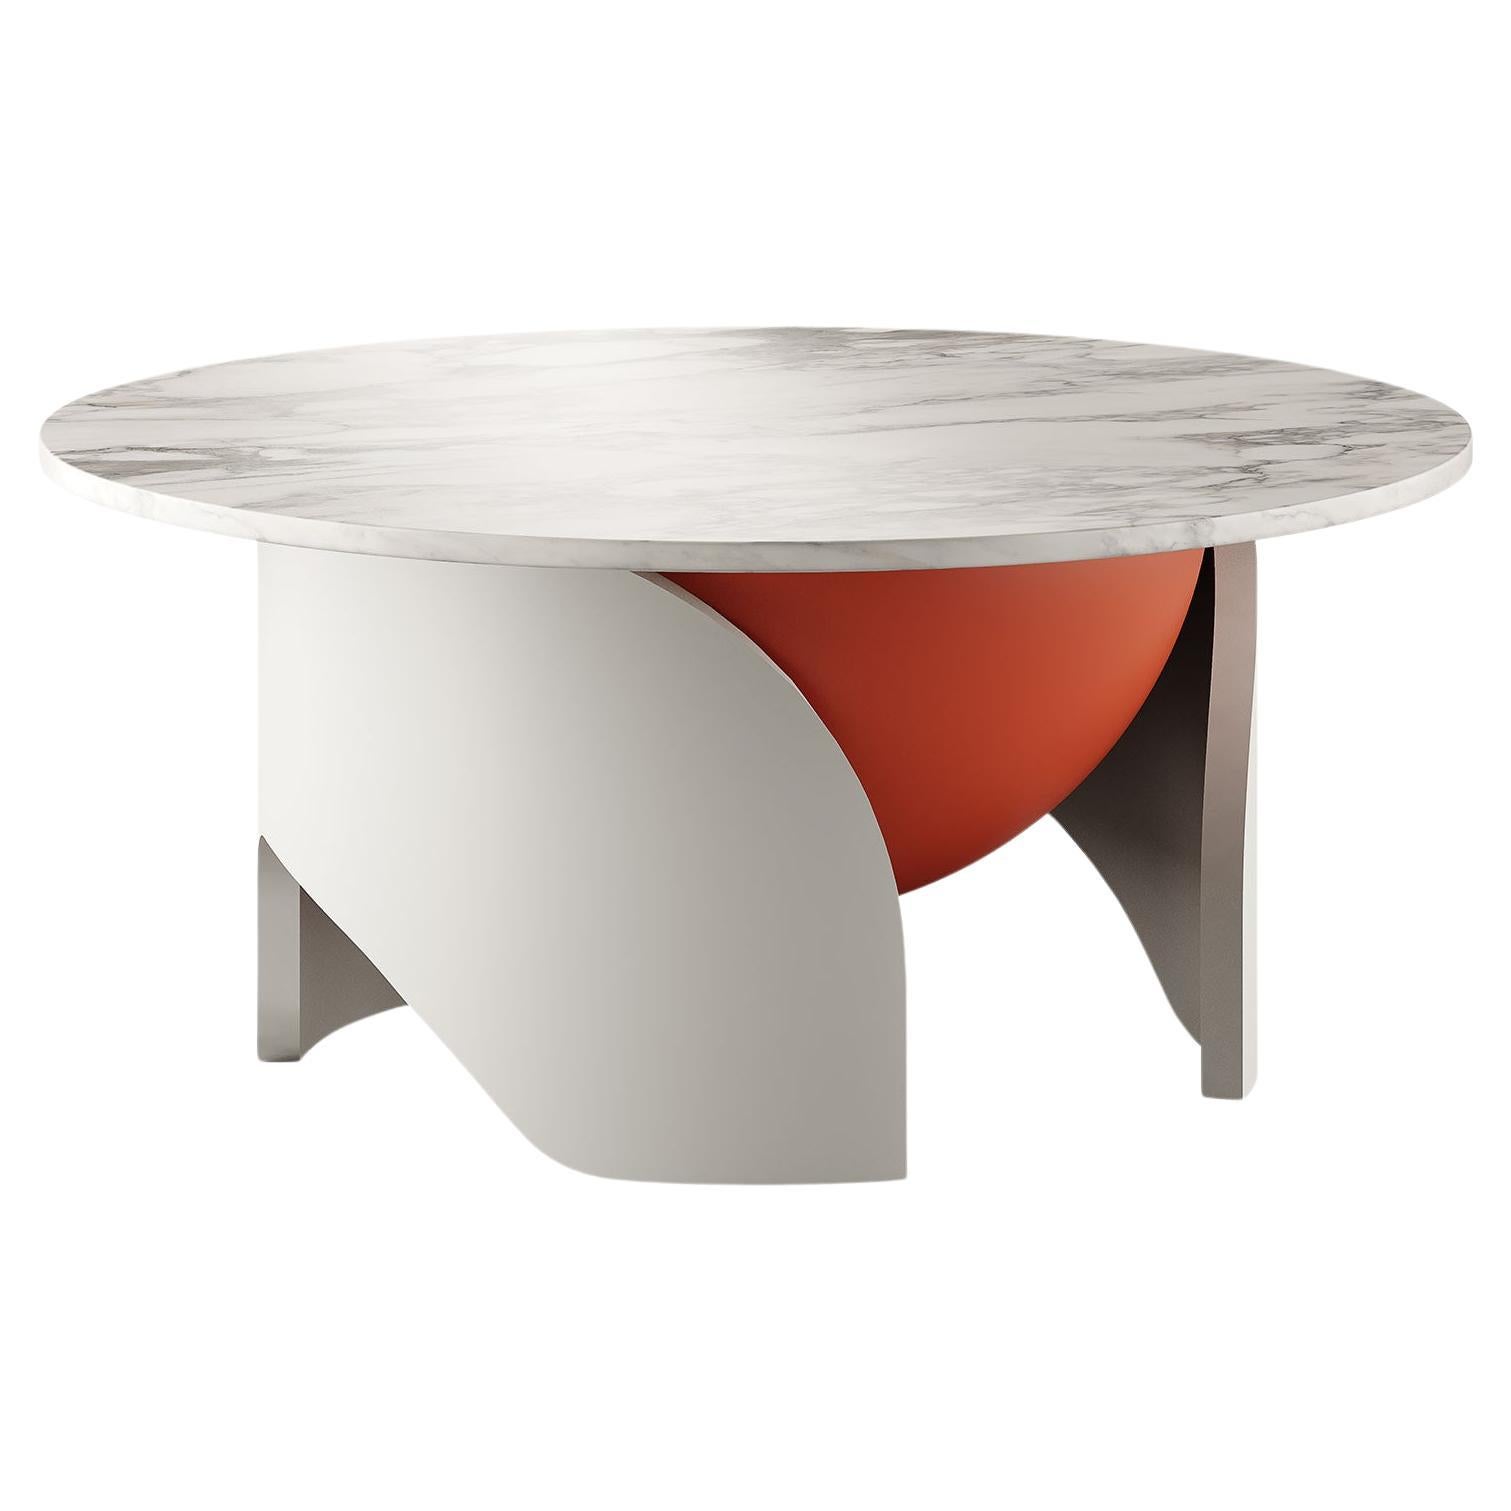 Modern Round Center Table Calacatta White Marble Top Grey & Orange Matte Lacquer